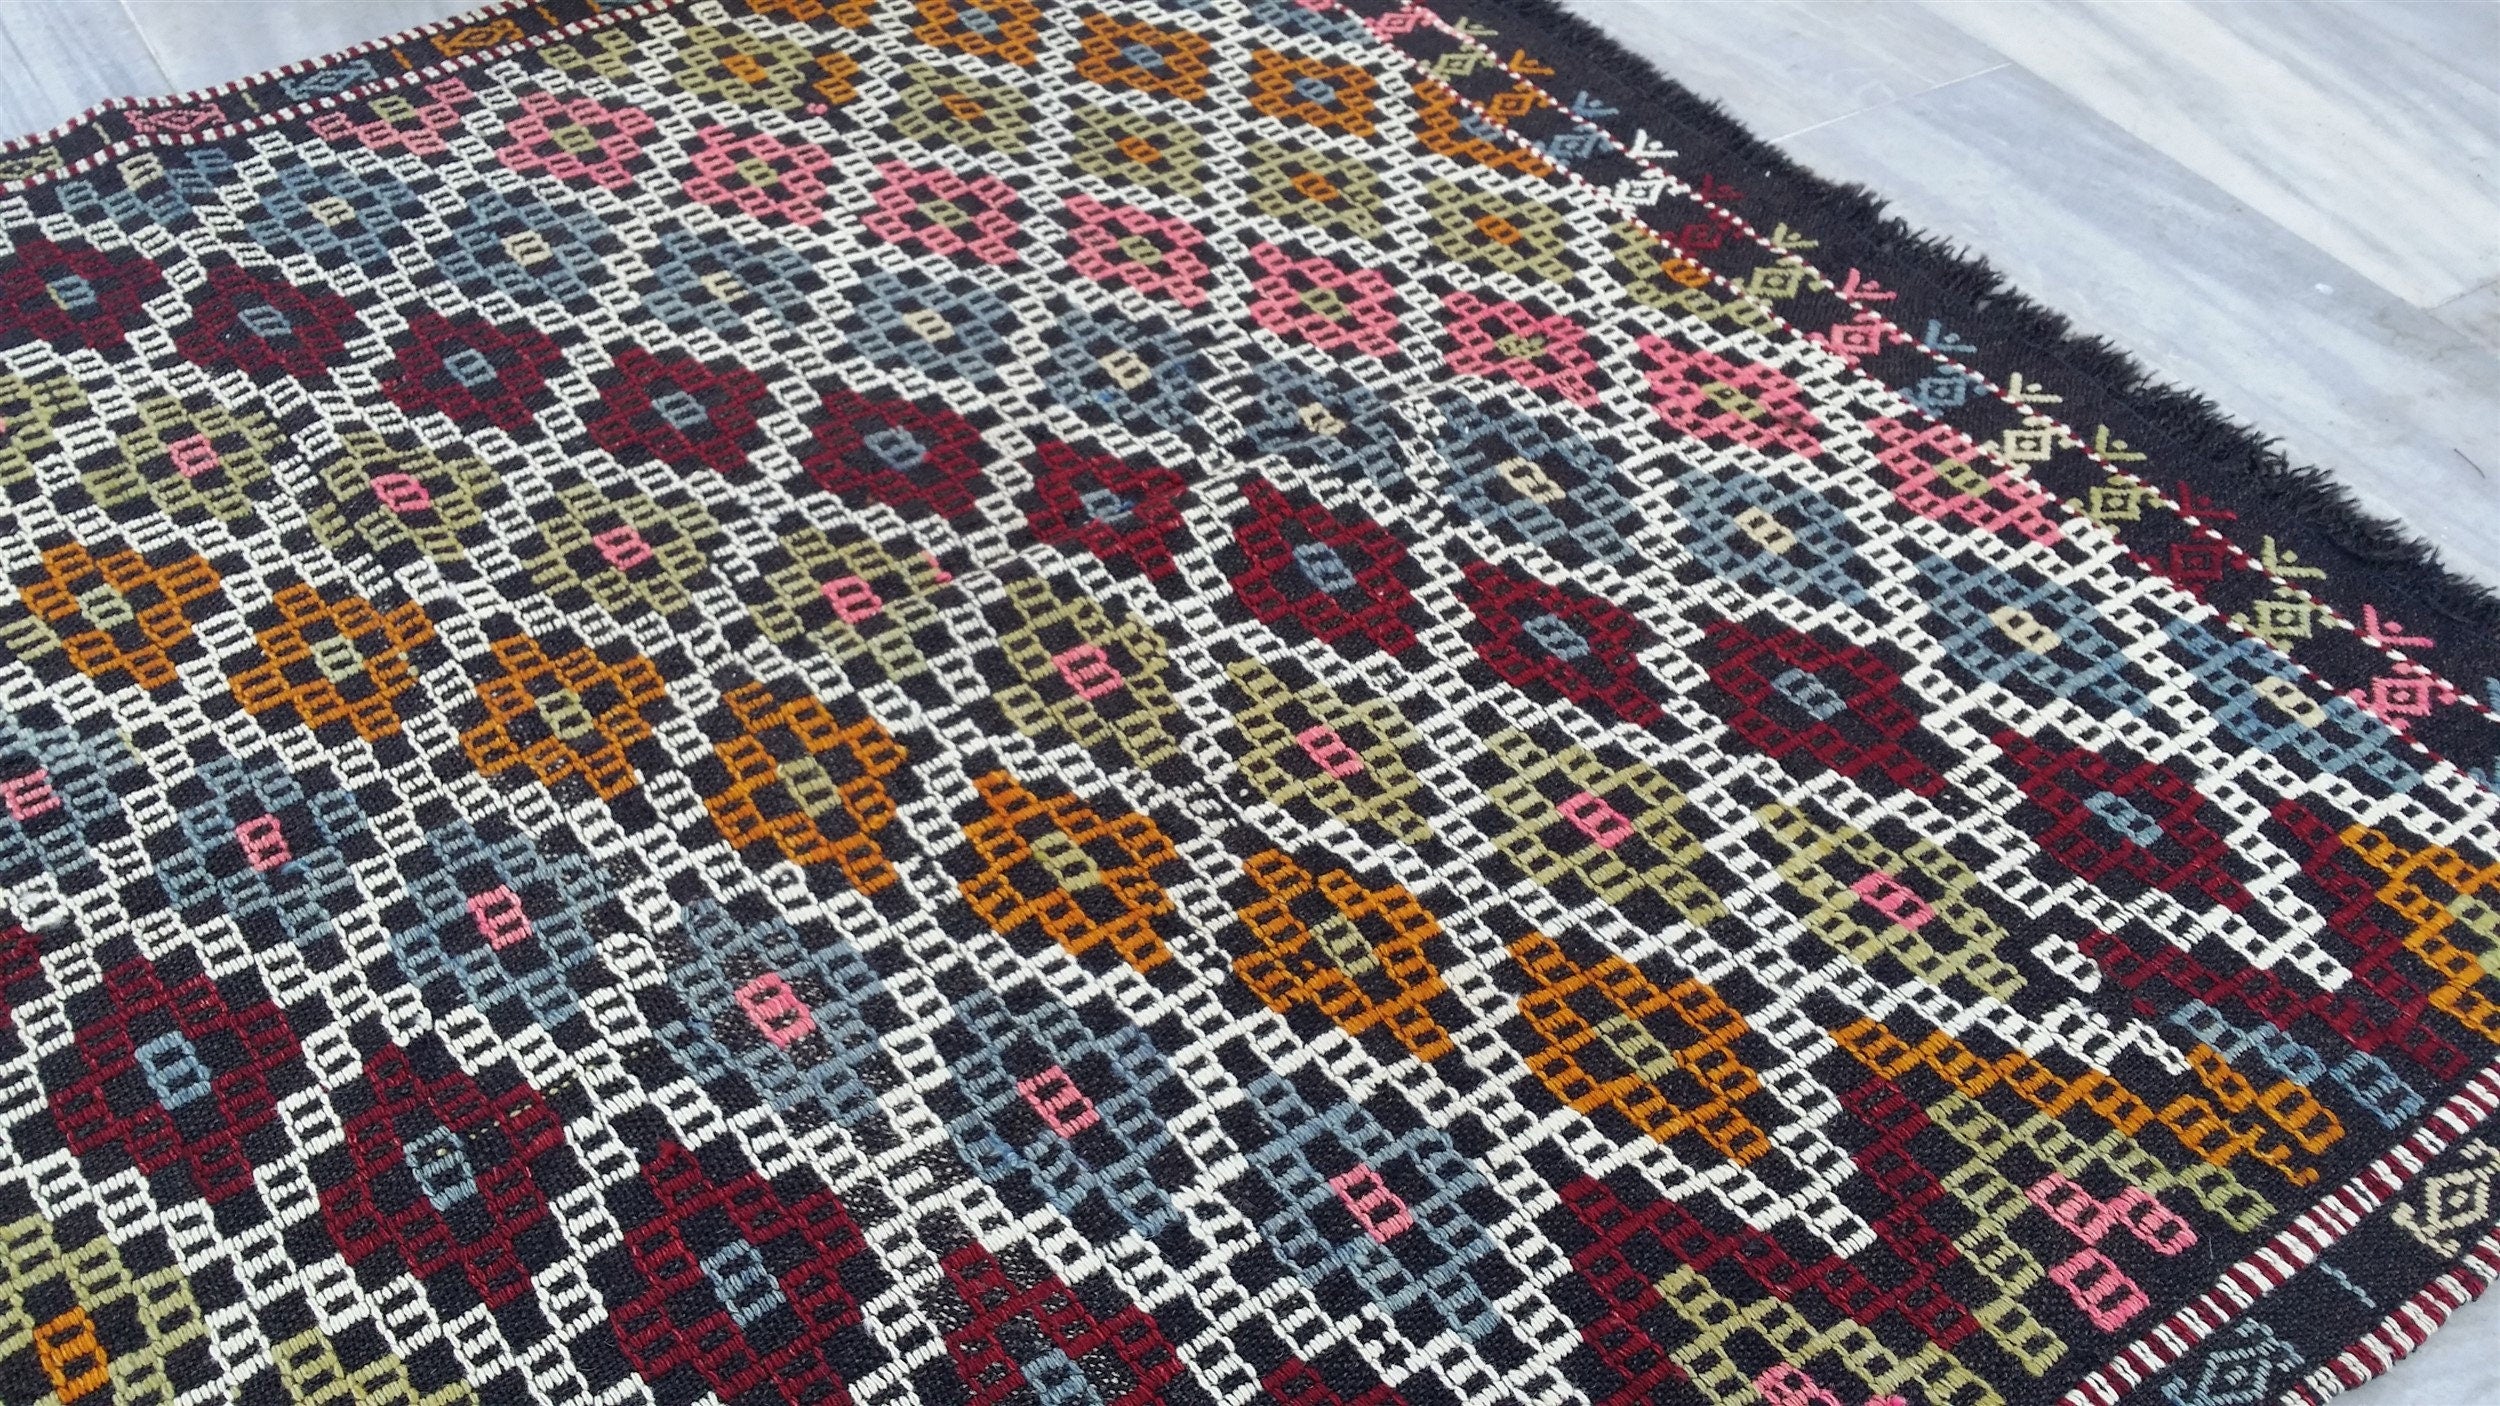 Brown Turkish Kilim Rug, 4 x 6 ft Red Blue & White Turkish Cicim Embroidery on Turkish Kilim, Boho Rustic Natural Wool Handmade Persian Rug